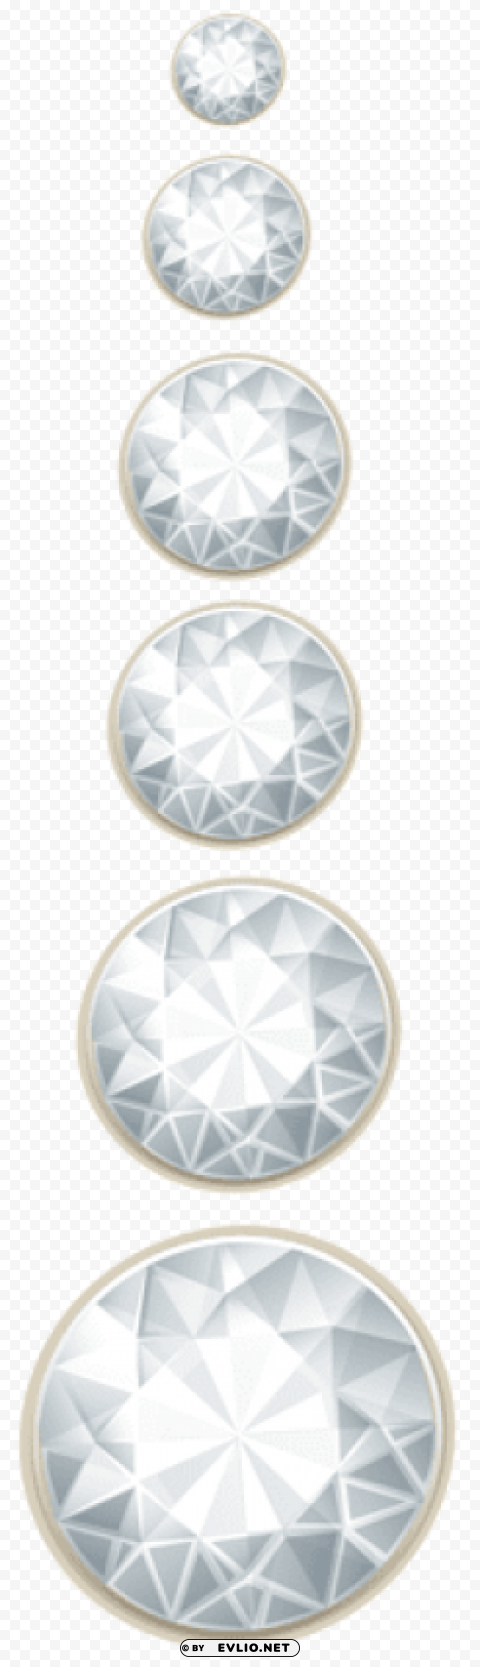 diamond decor Free PNG download